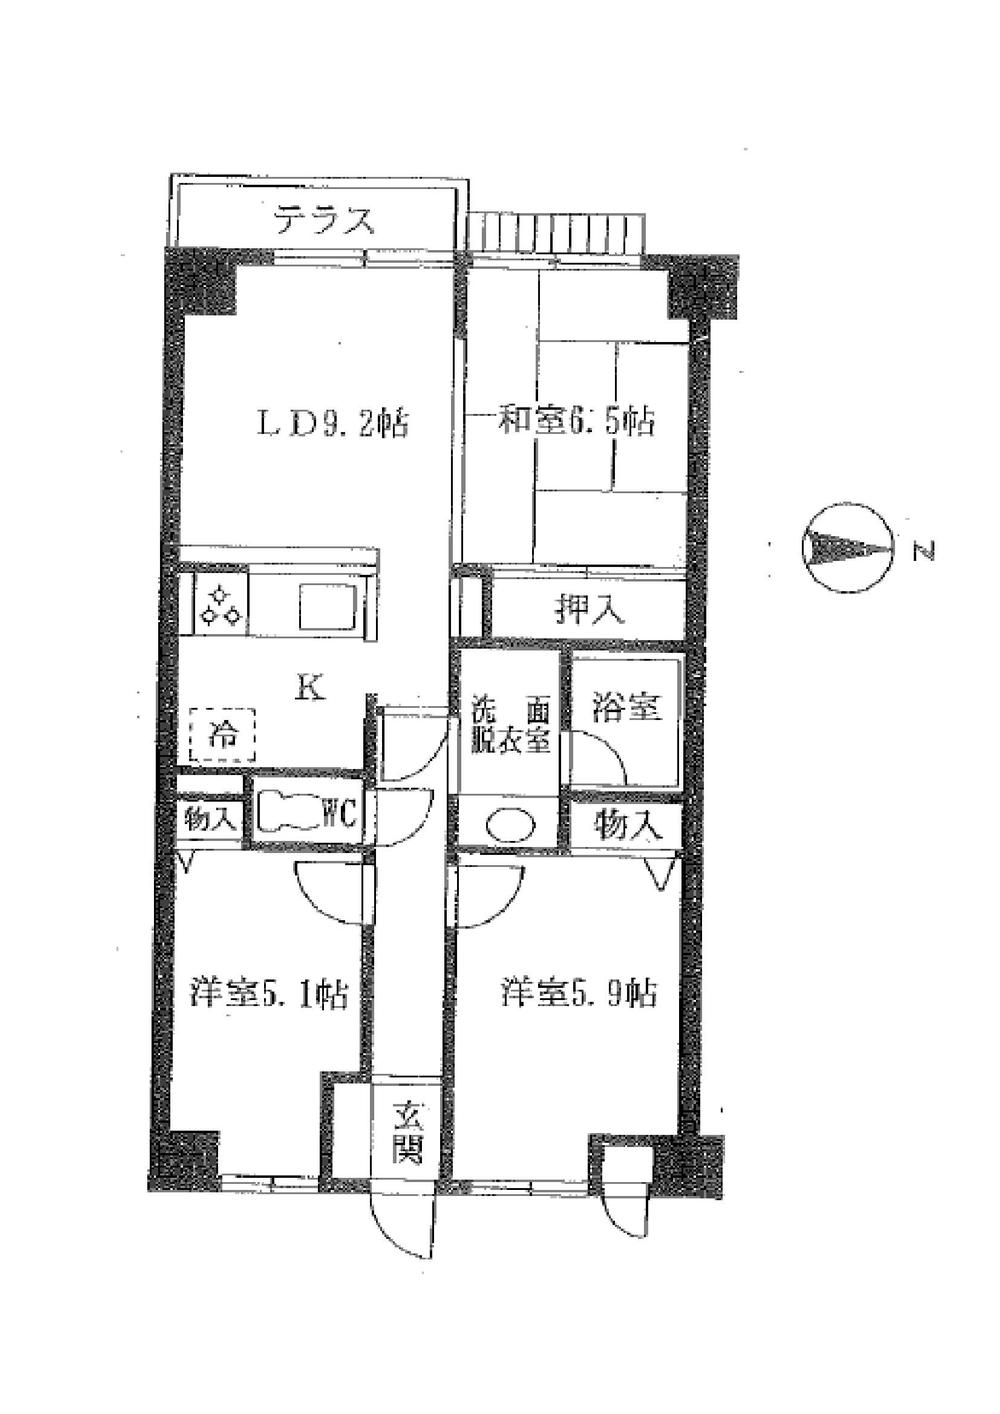 Floor plan. 3LDK, Price 9.8 million yen, Occupied area 62.54 sq m , Balcony area 7.2 sq m